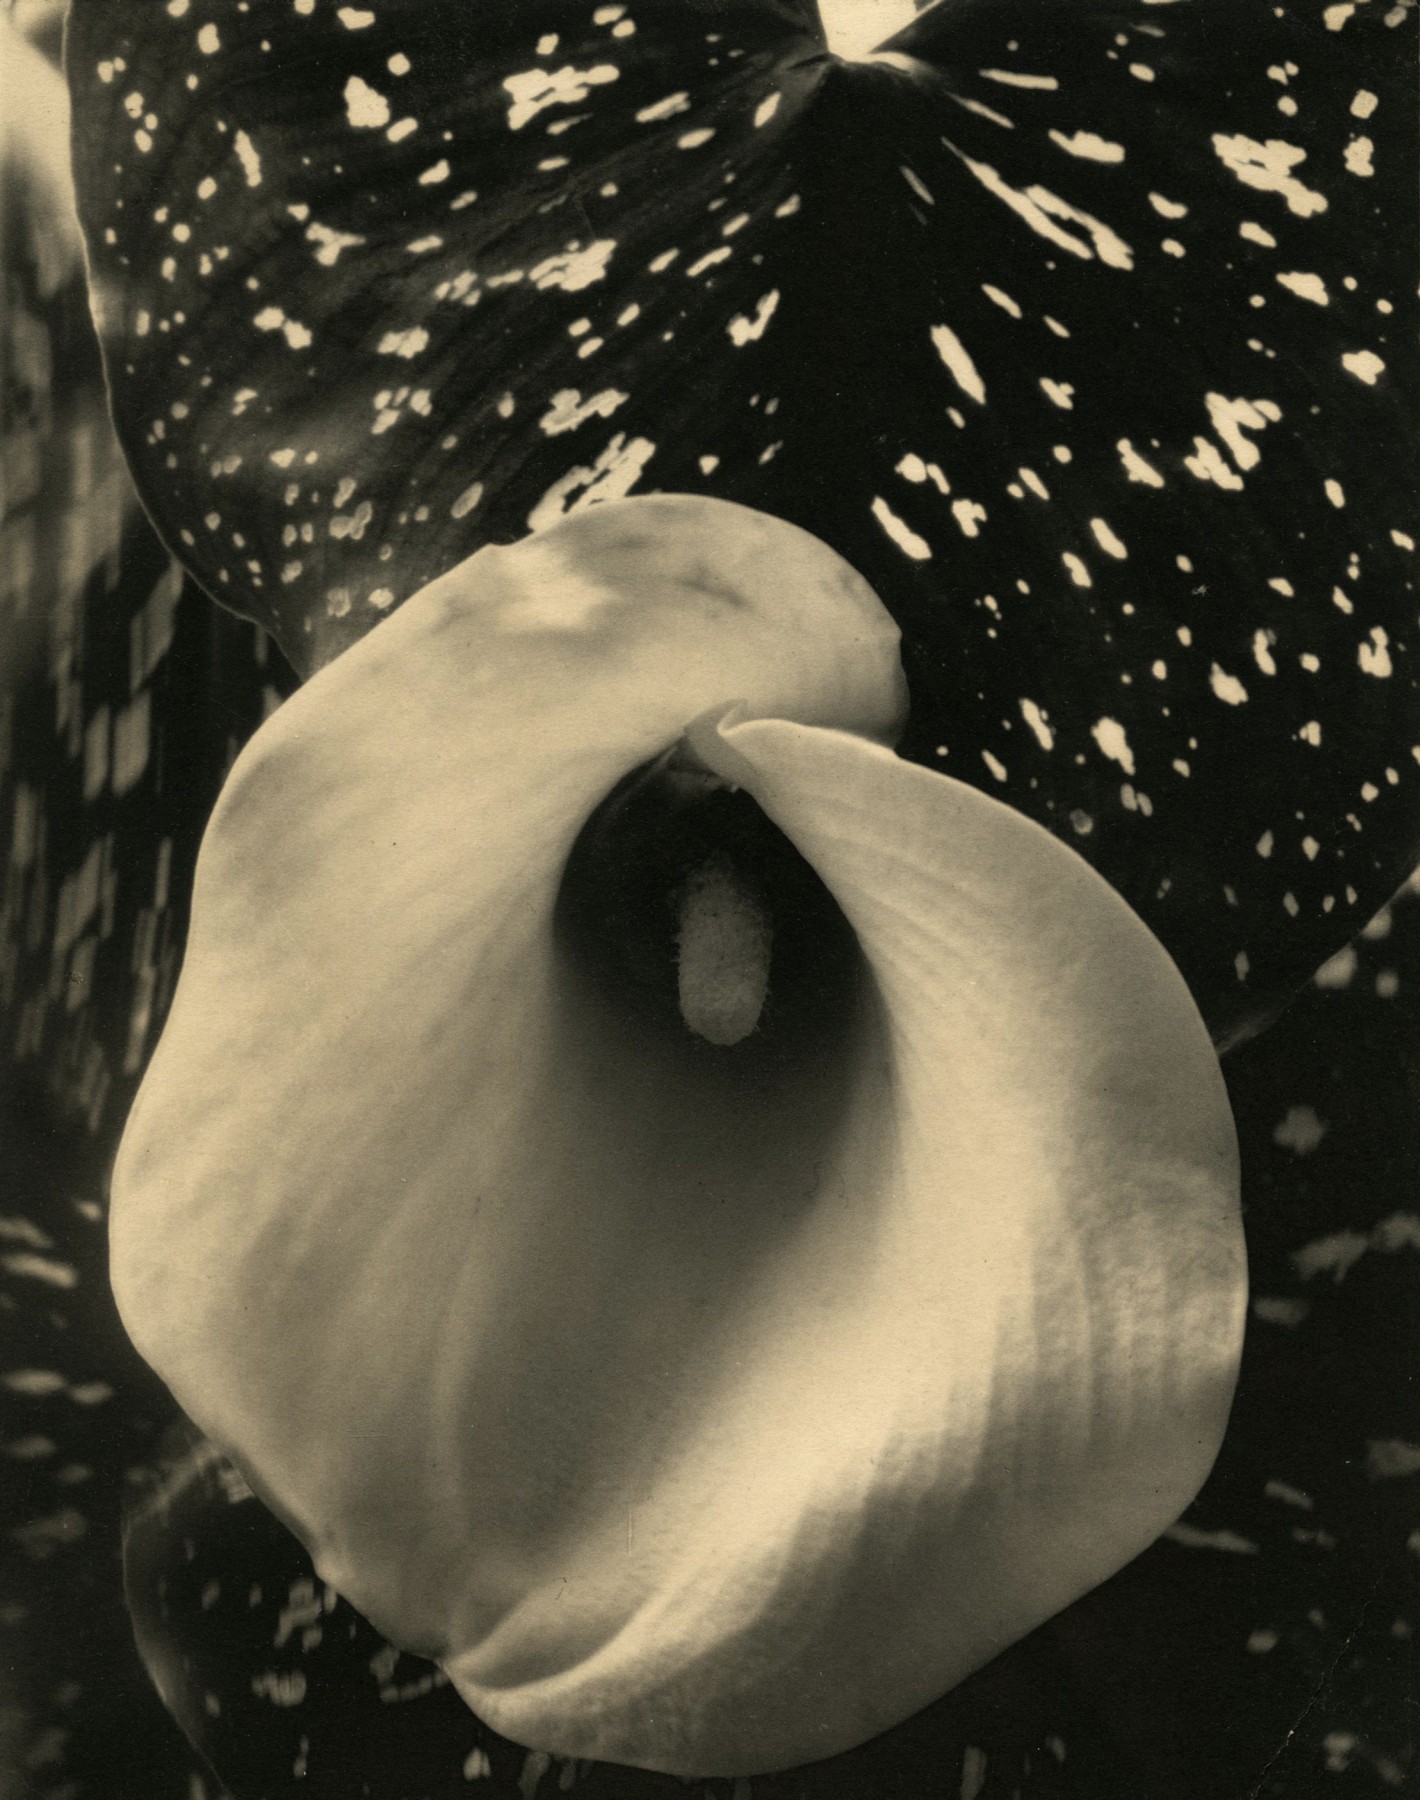 Edward Steichen  Calla Lily, c.1921  Palladium print; printed c.1921  10 x 8 inches